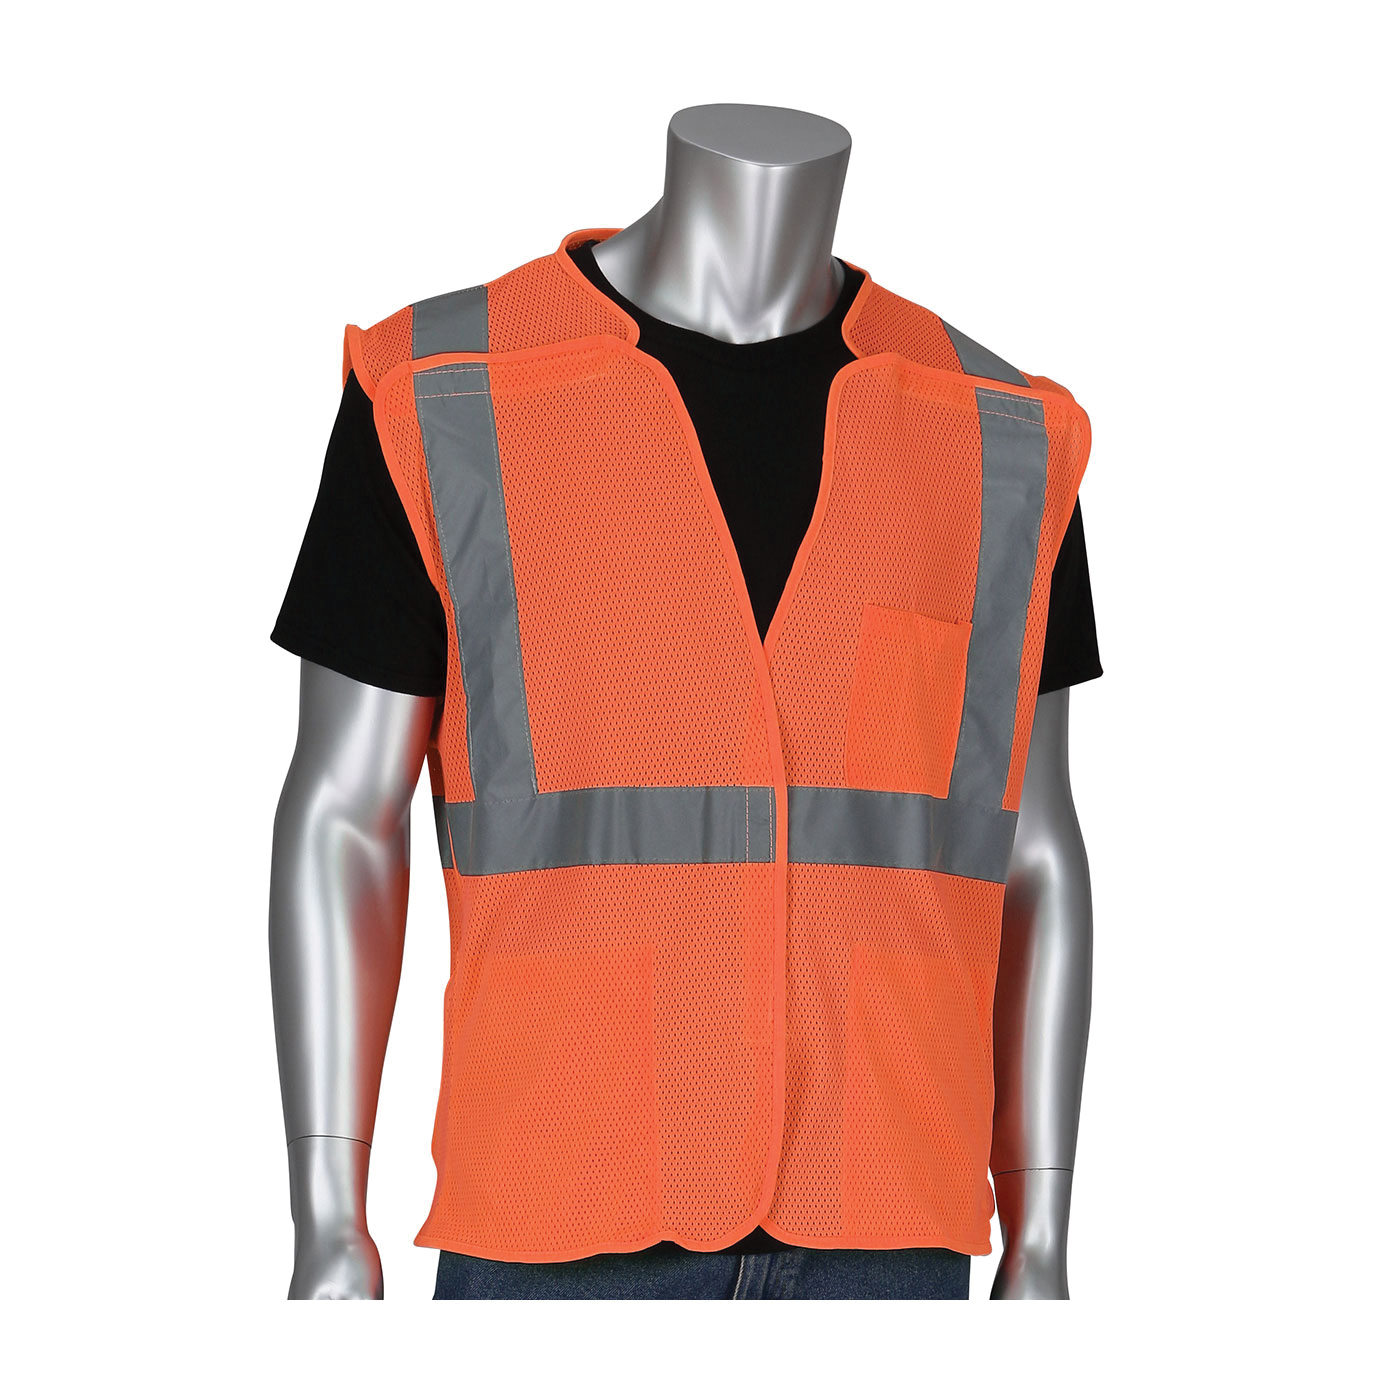 PIP® 302-5PMVOR-L Safety Vest, L, Hi-Viz Orange, Polyester, Hook and Loop Closure, 3 Pockets, ANSI Class: Class 2, Specifications Met: ANSI 107 Type R